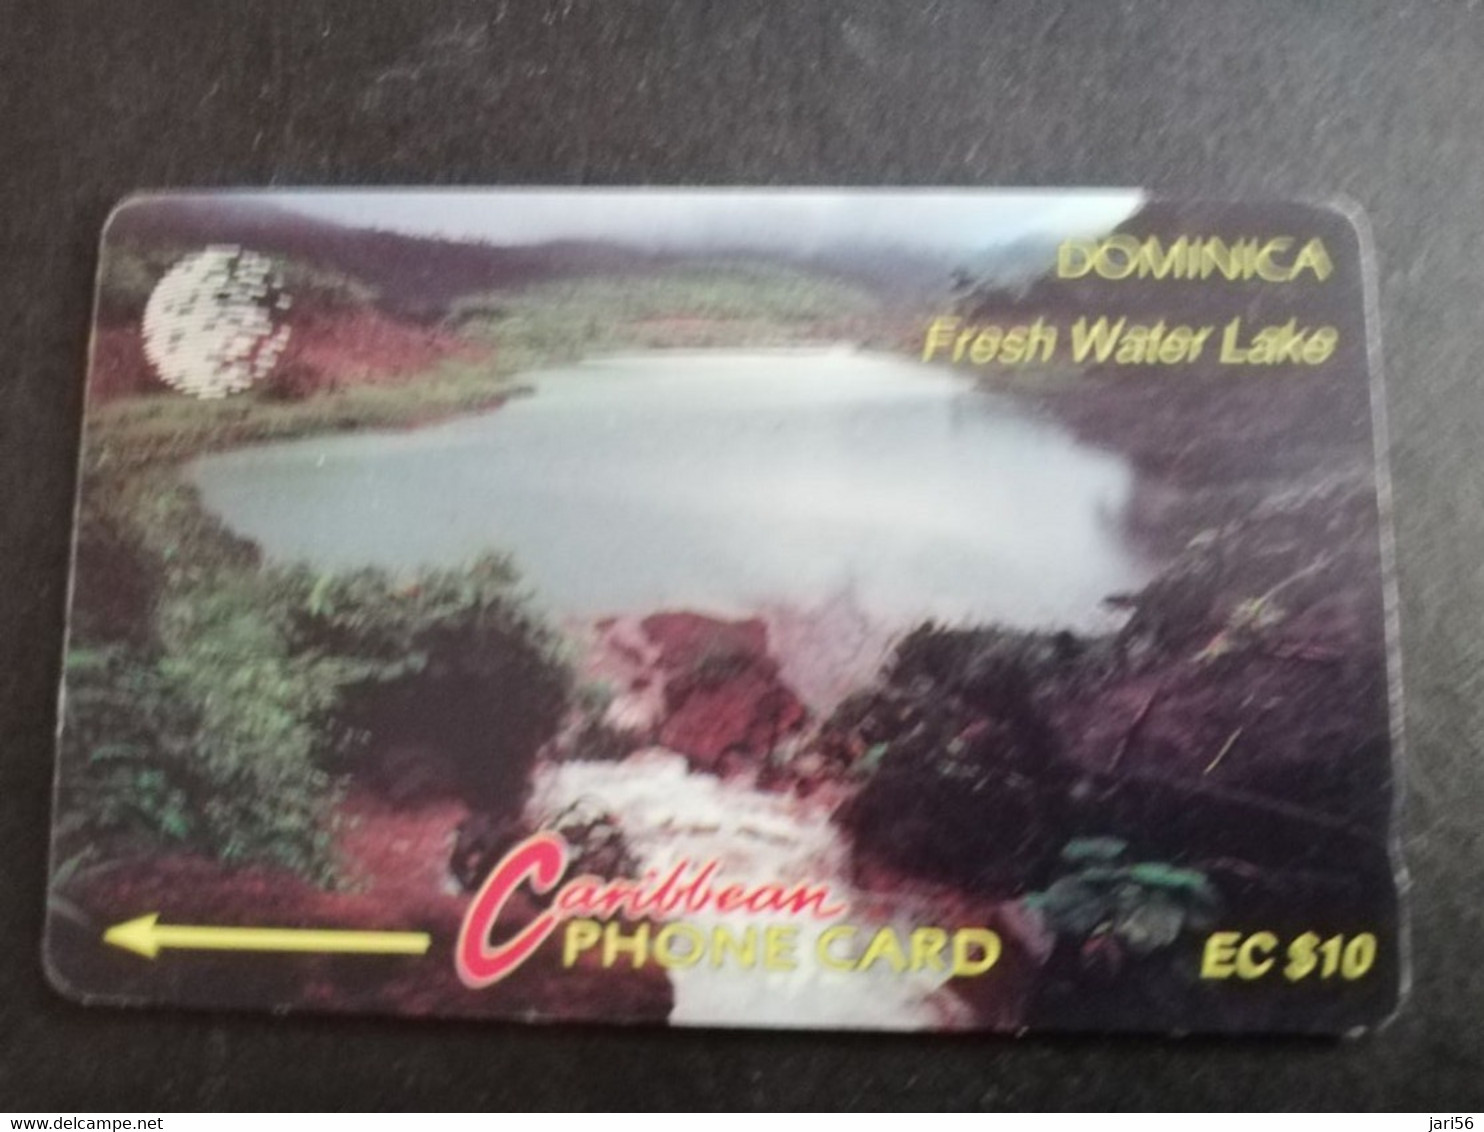 DOMINICA / $10,- GPT CARD  6CDMB  FRESCH WATER  LAKE       Fine Used Card  ** 6290 ** - Dominica